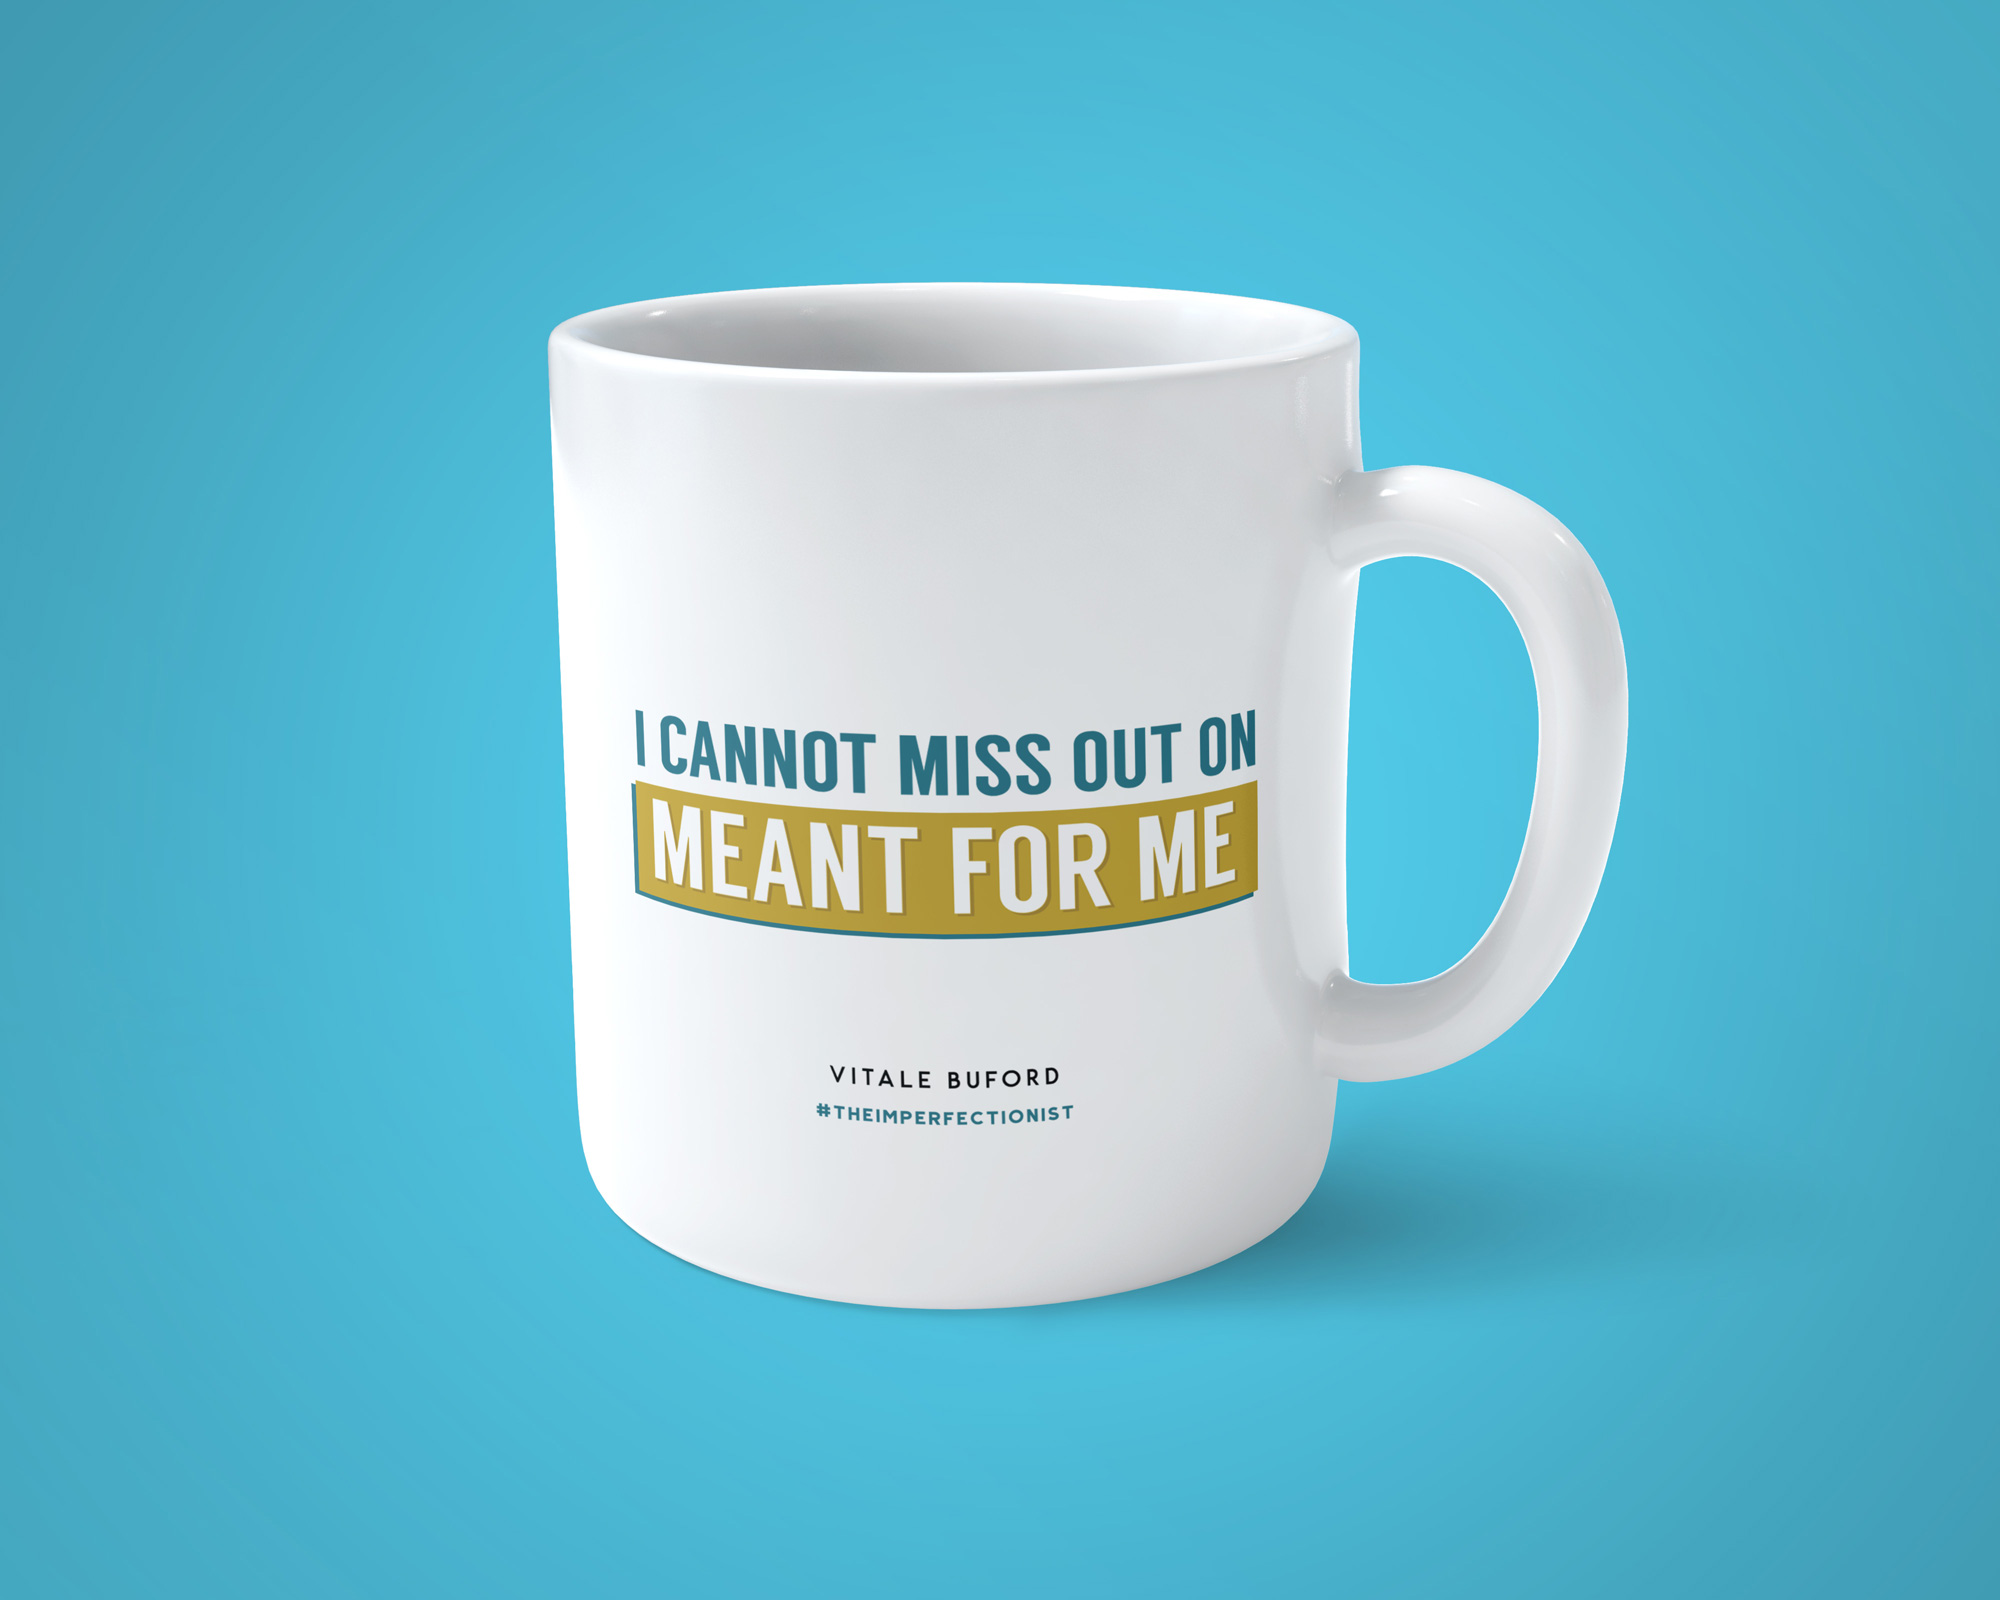 I cannot miss out on what's meant for me mug design | branded mug designs | J. Alexandria Creative, Huntsville, Alabama graphic design studio